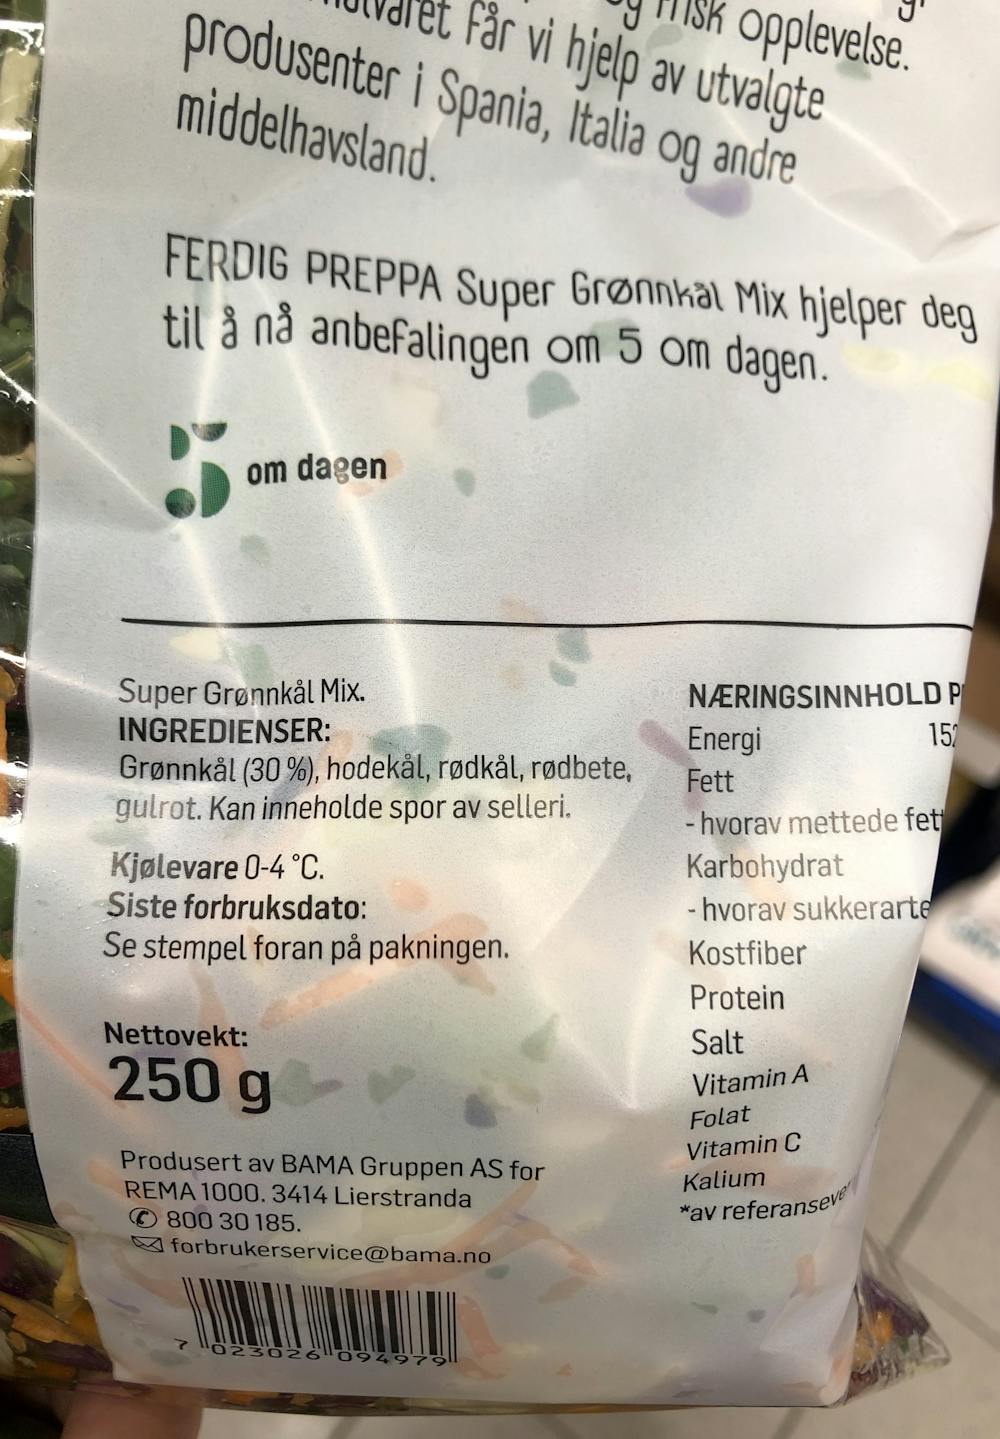 Ingredienslisten til Super grønnkål mix, Ferdig preppa